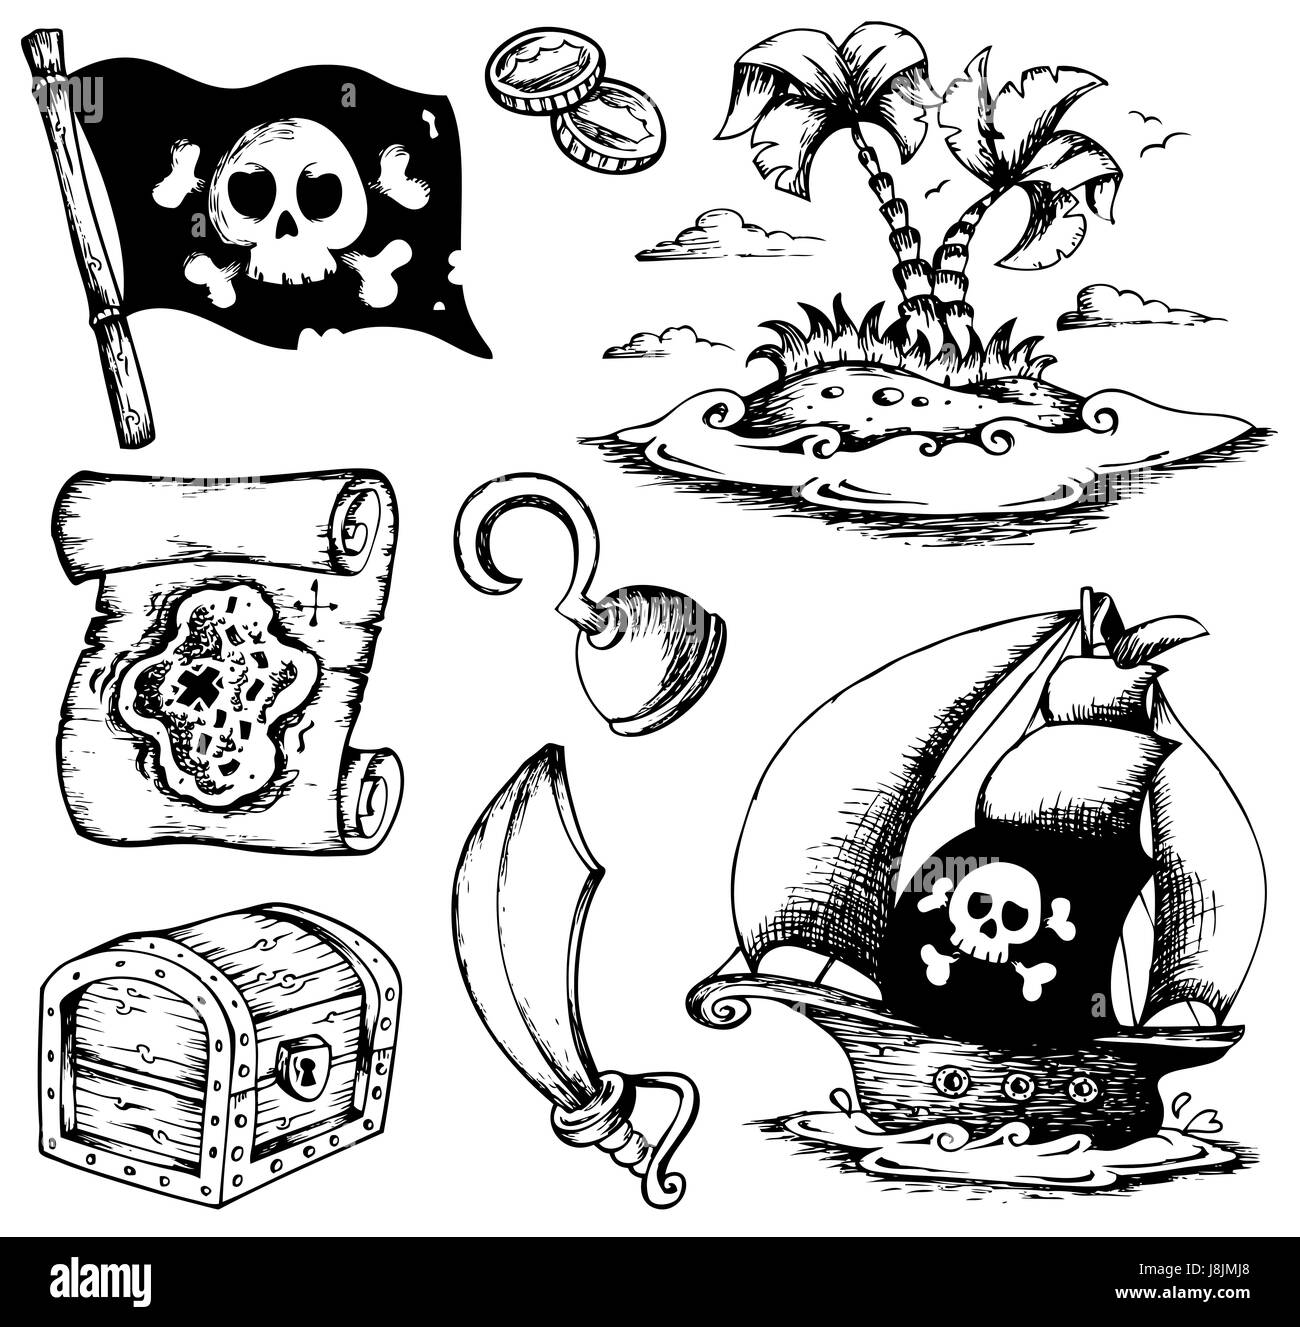 coin, flag, banner, island, palm, treasure, pirate, isle, danger, object, Stock Photo